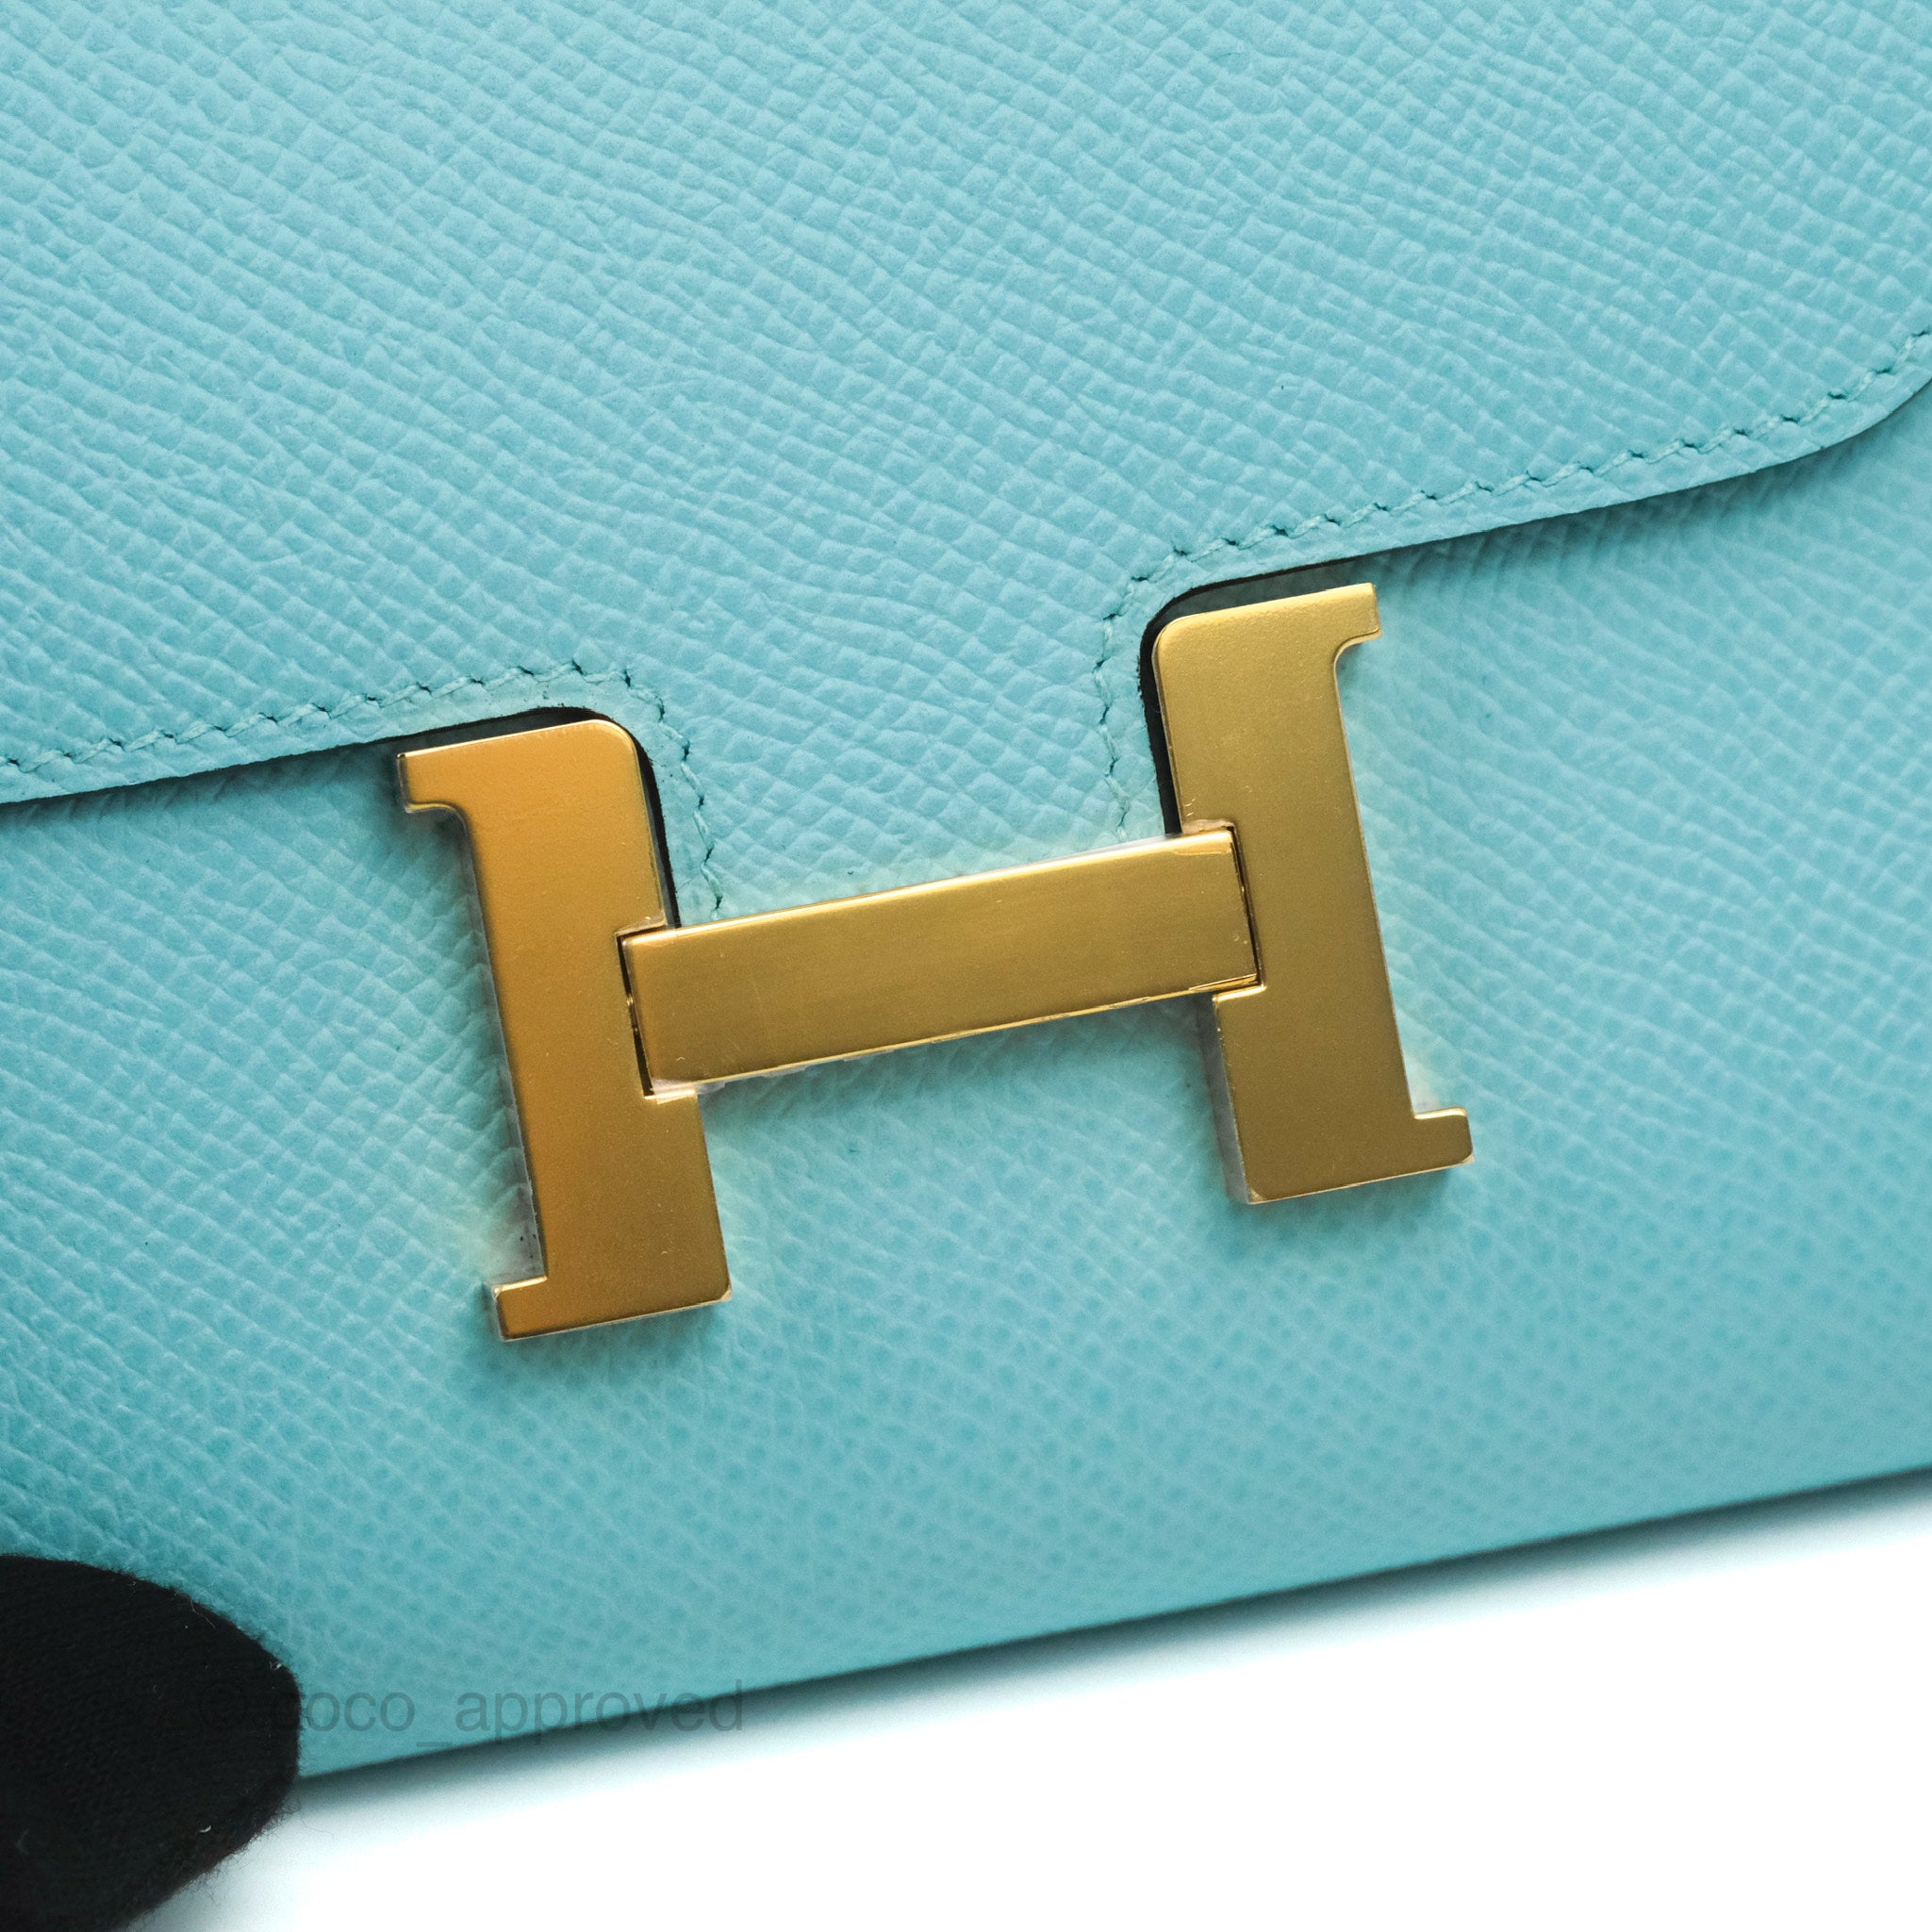 Blue Hermes Constance Compact Wallet – Designer Revival